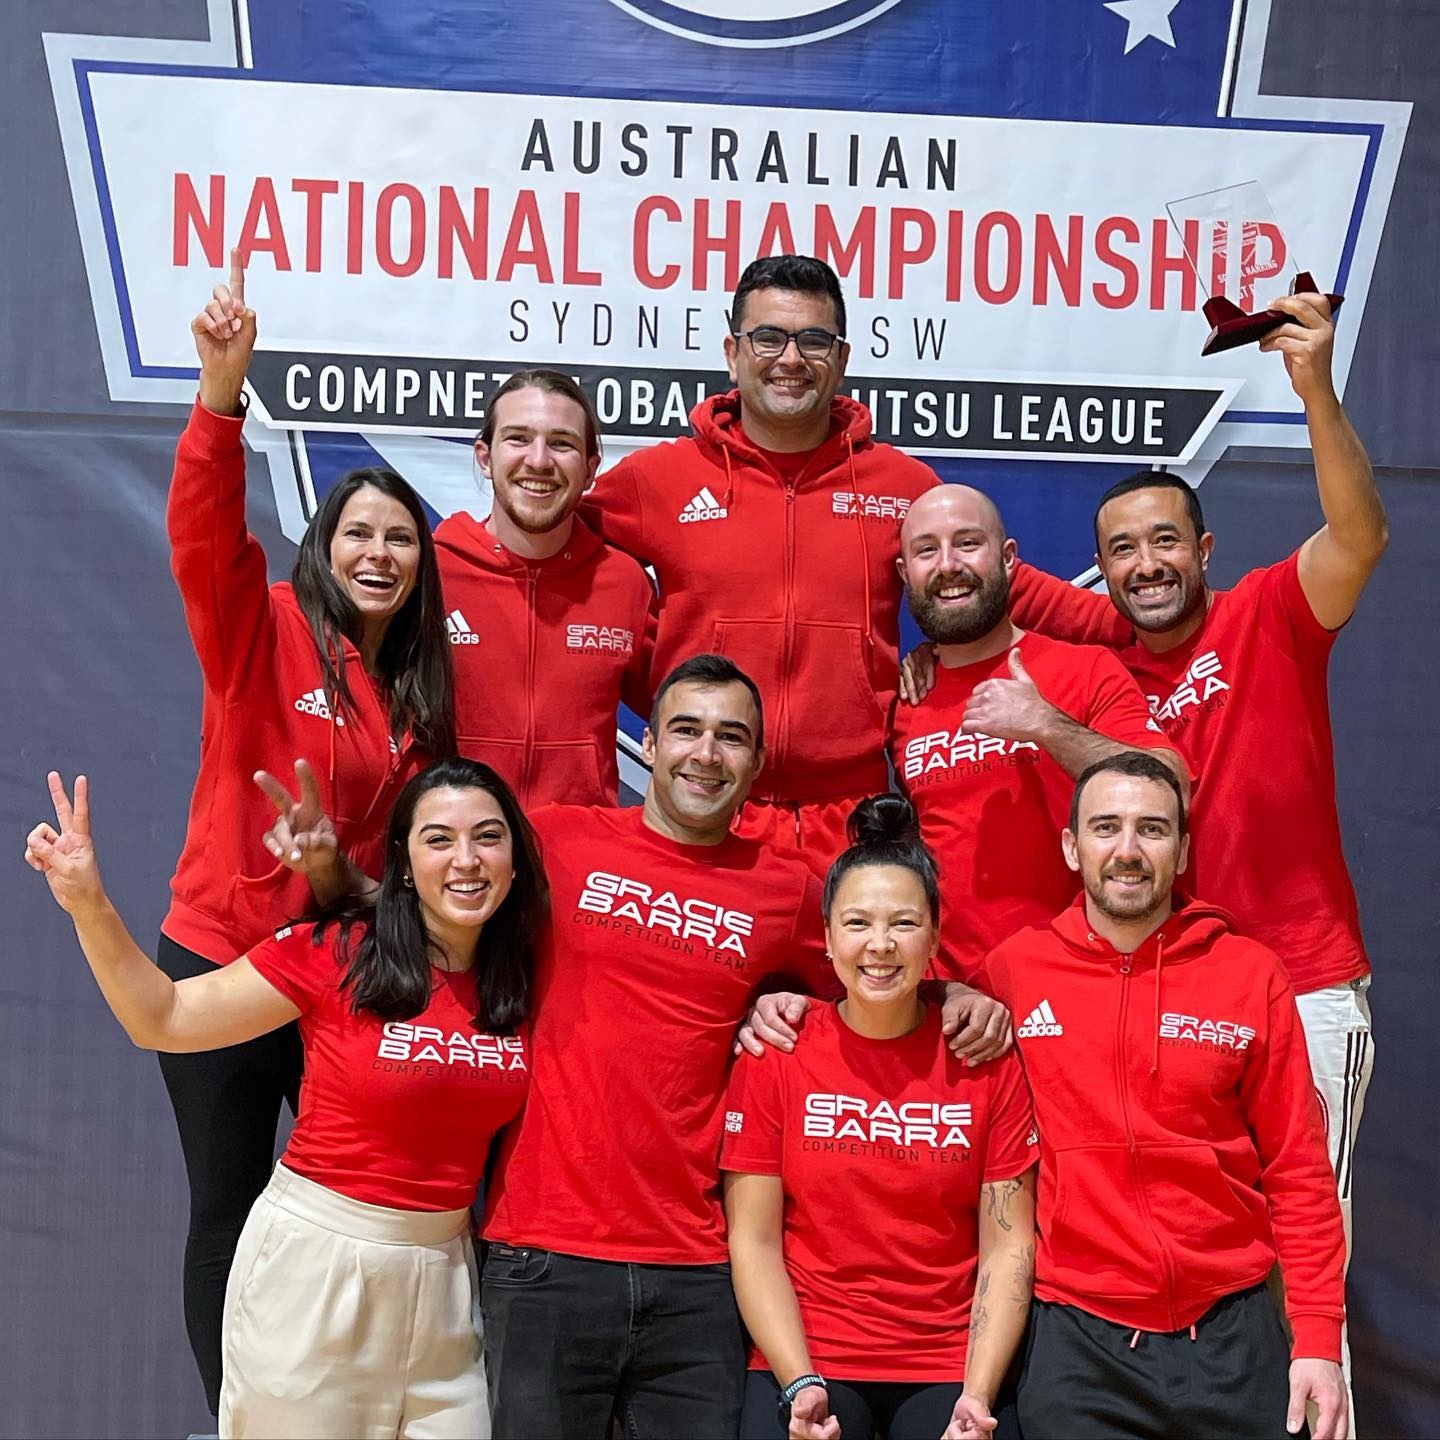 Compnet Australia National Championship Winners image